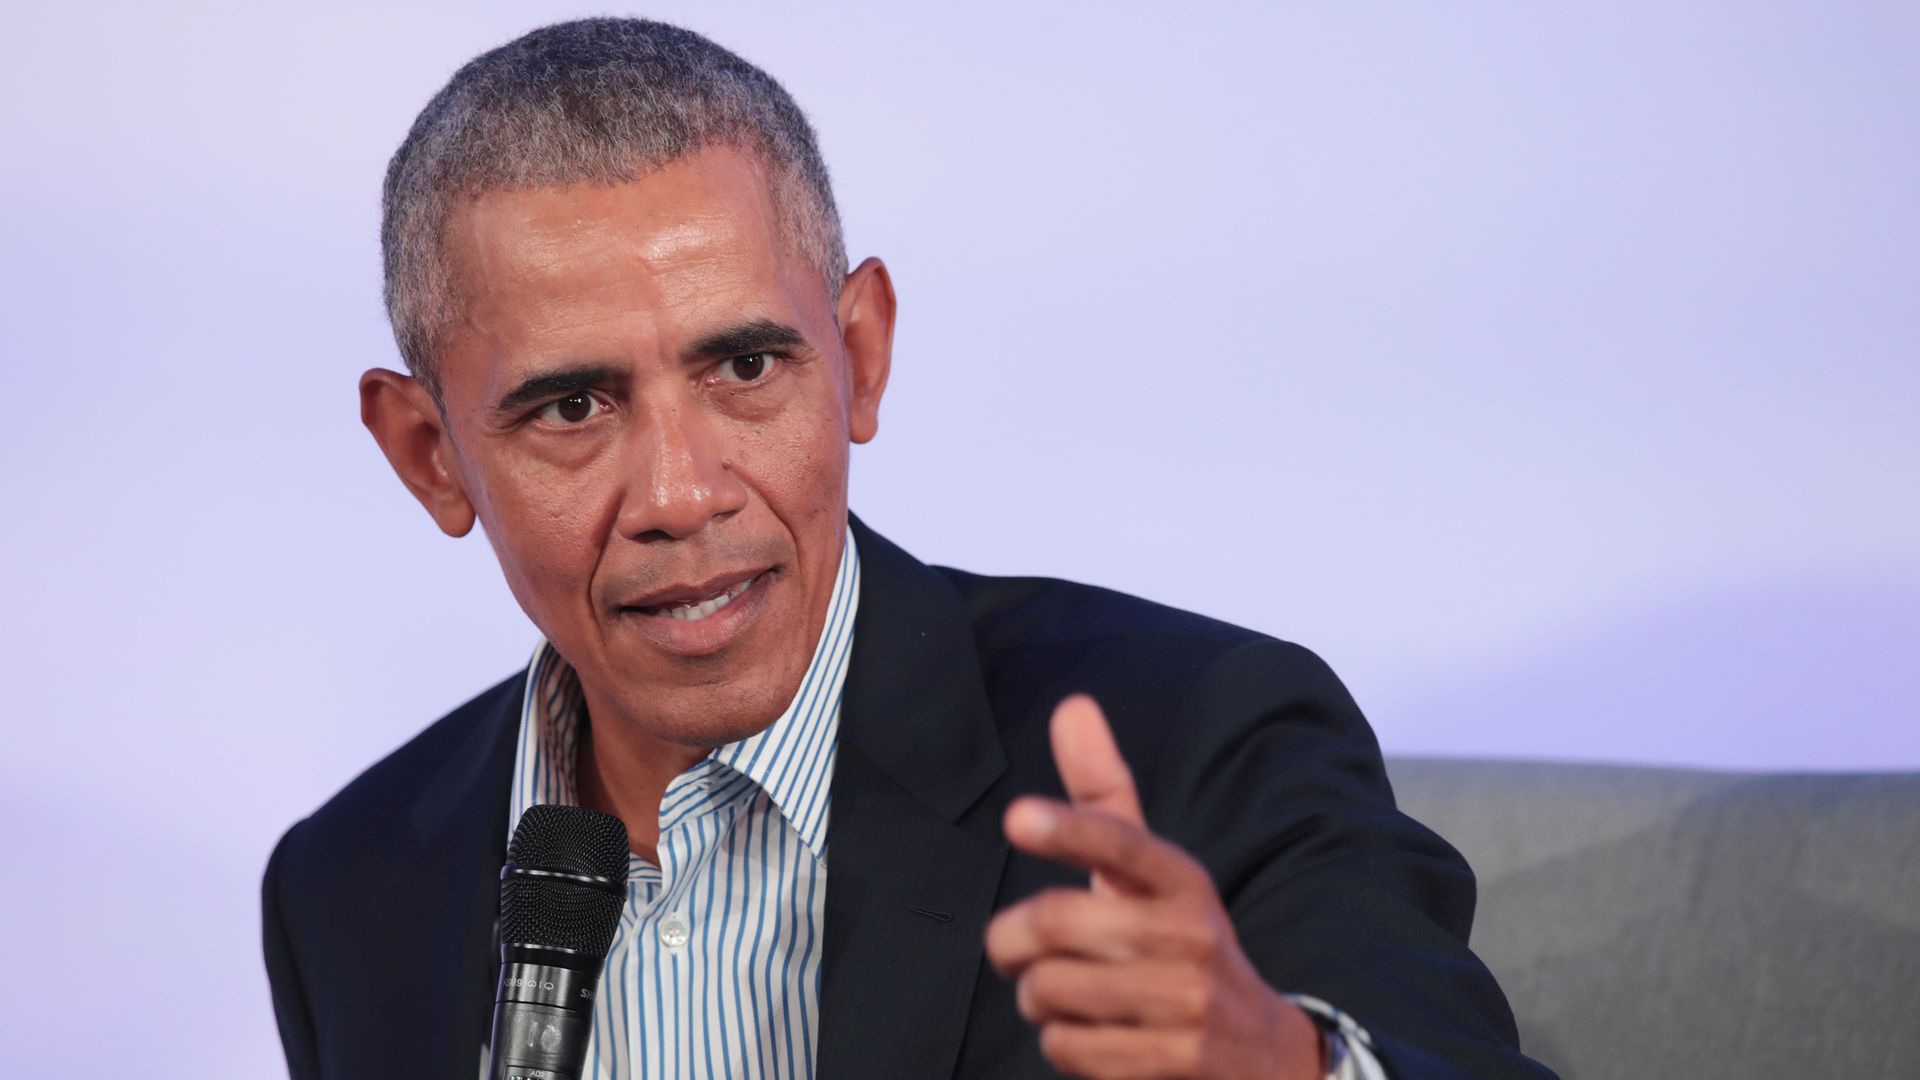 Former U.S. President Barack Obama speaks to guests at the Obama Foundation Summit